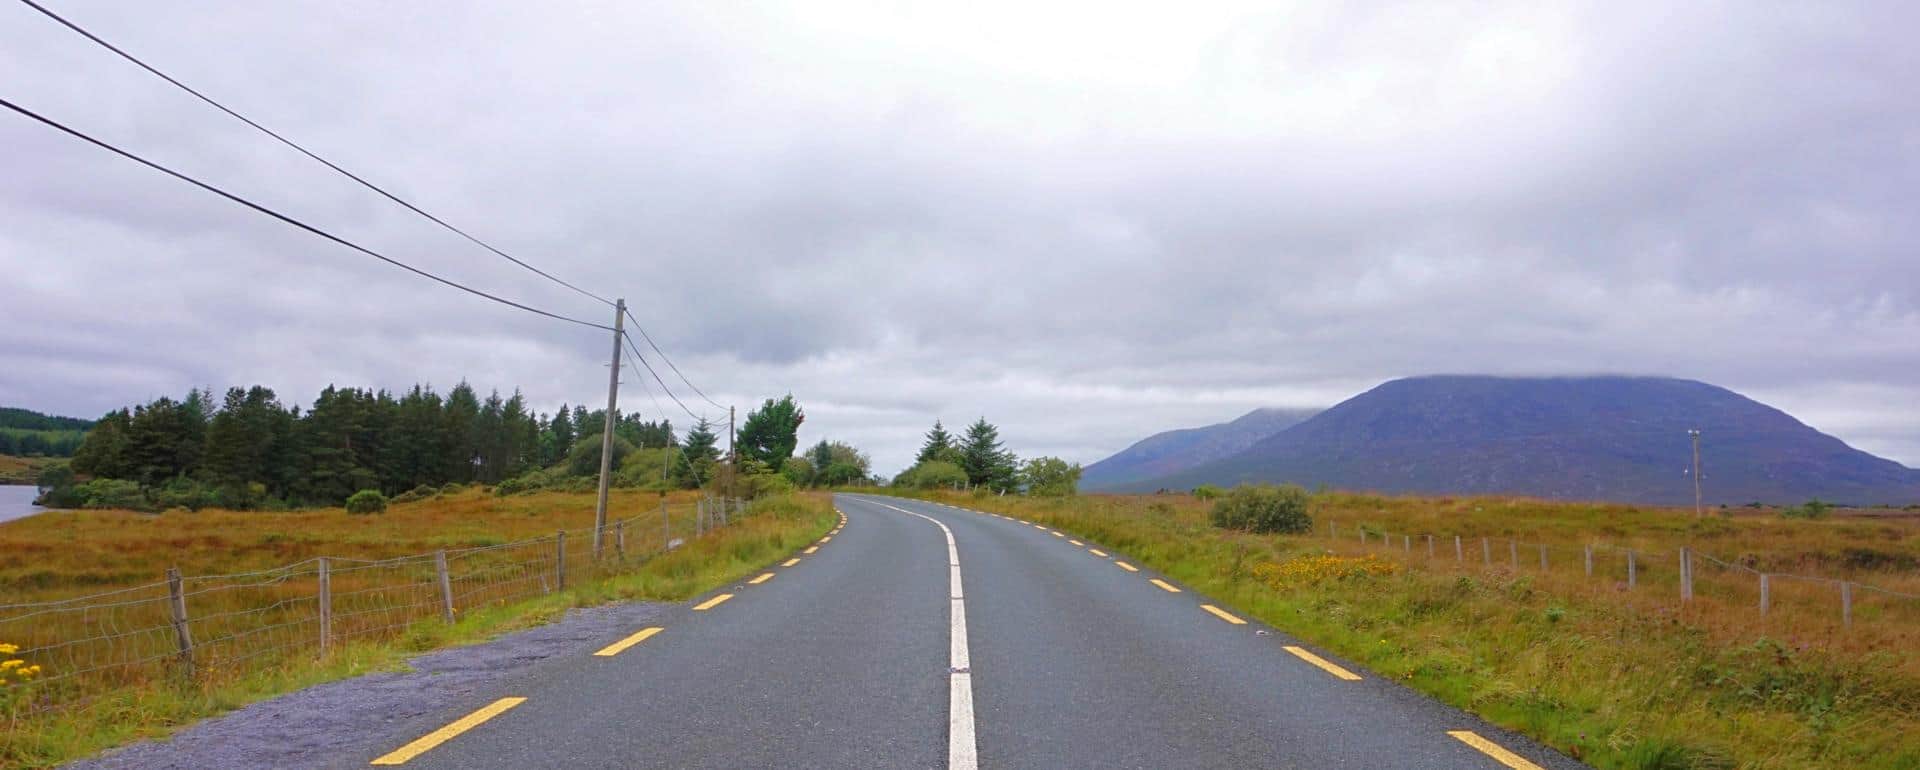 Ireland road trip Tips